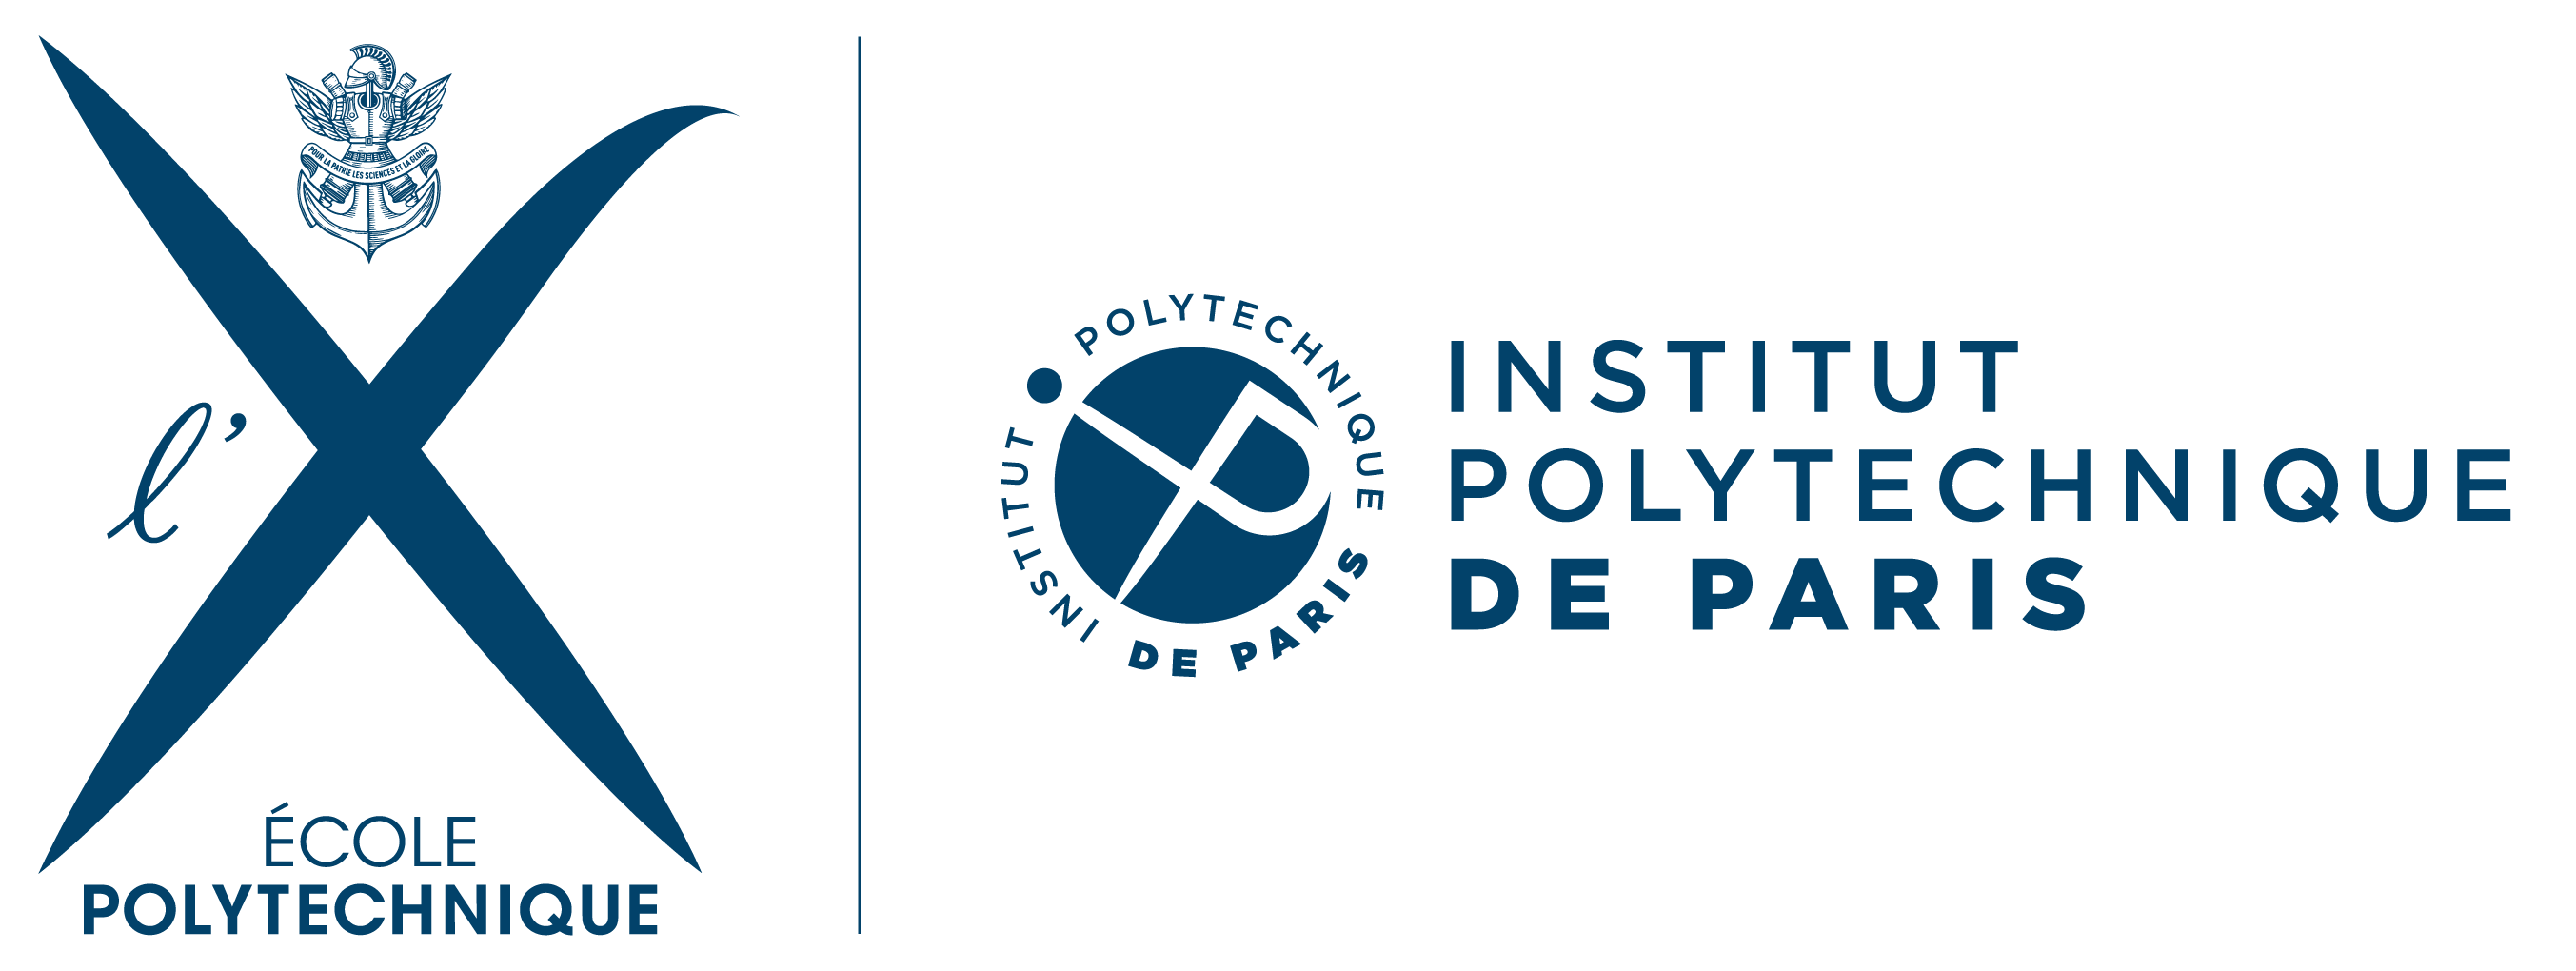 Ecole polytechnique logo